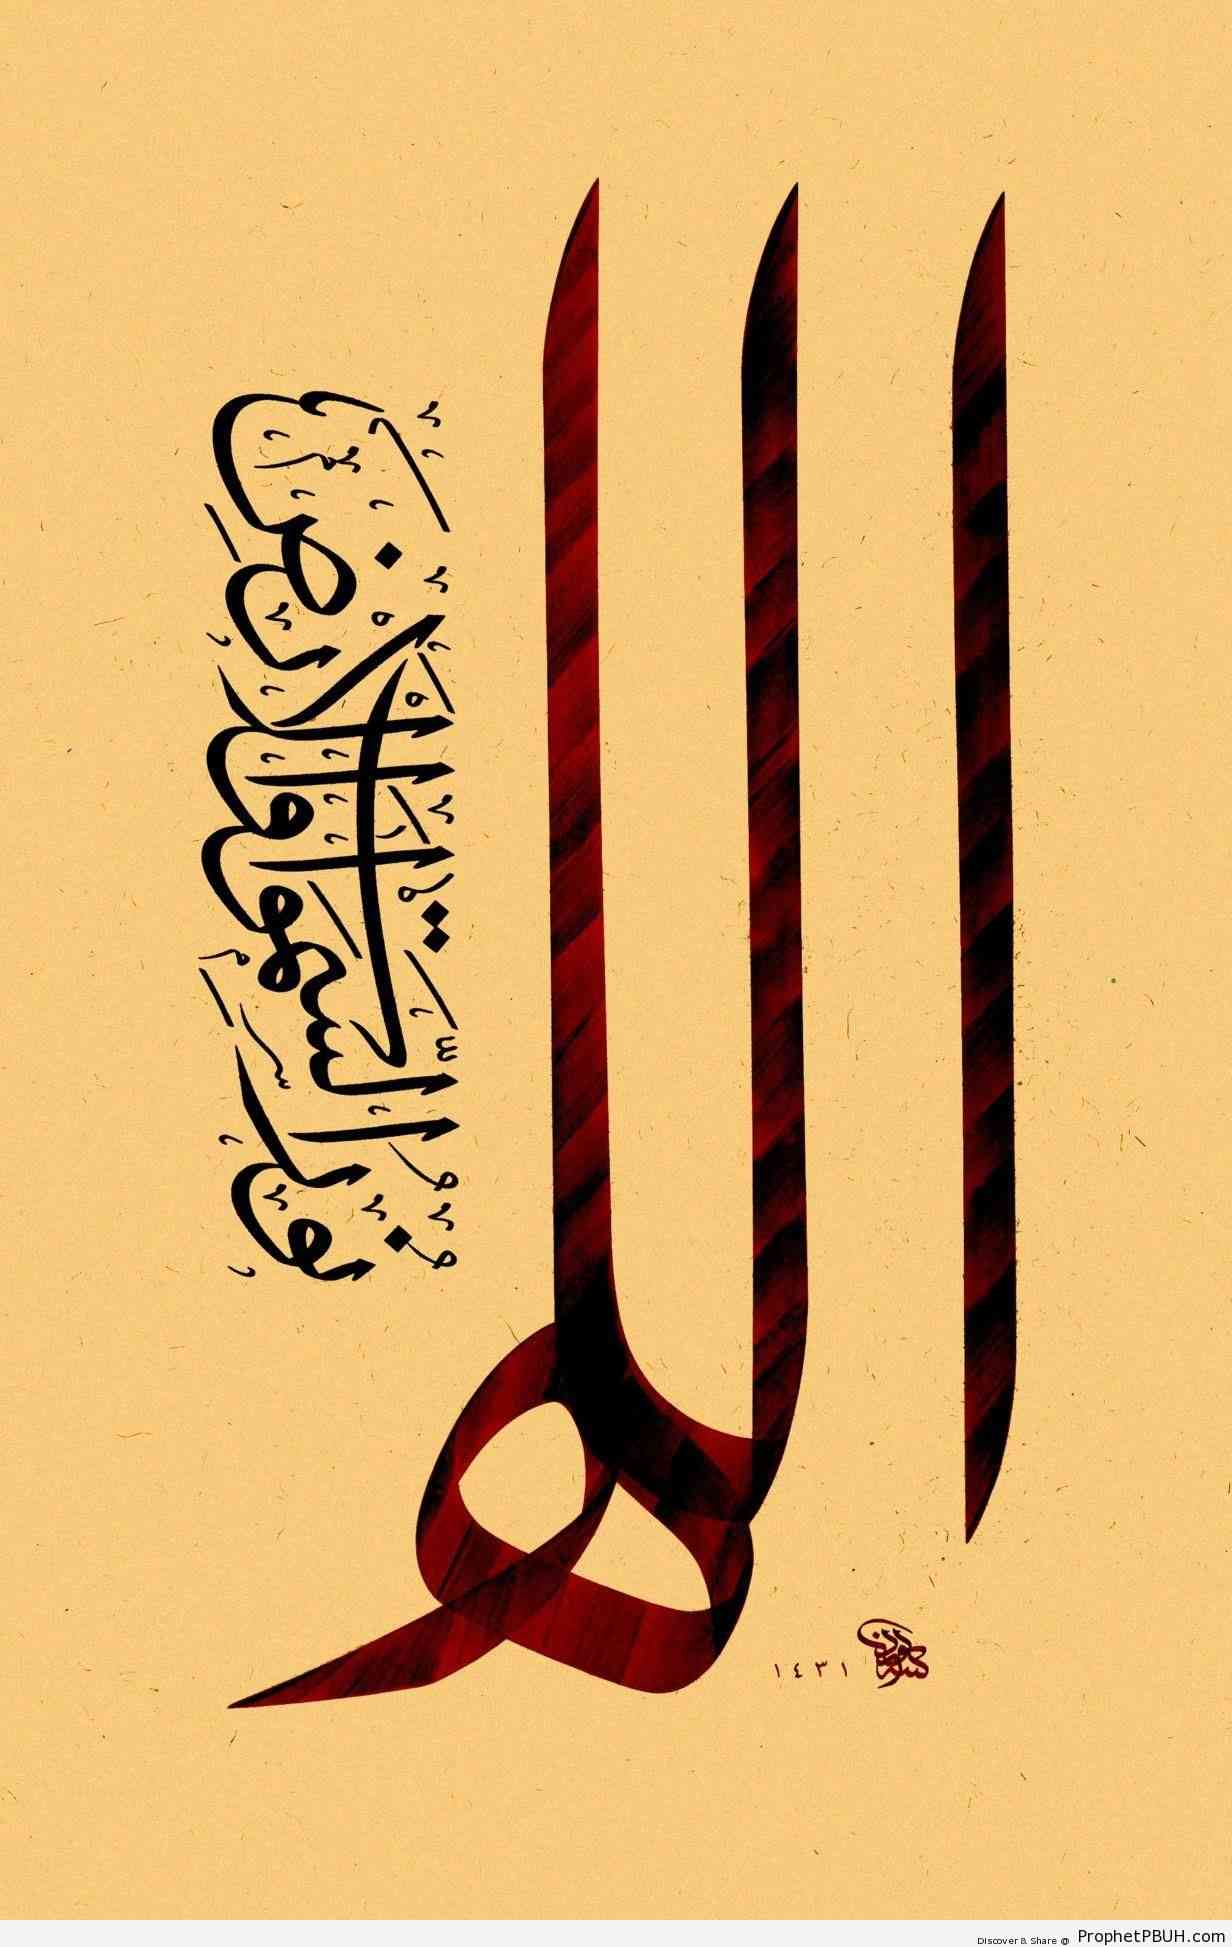 online arabic calligraphy generator